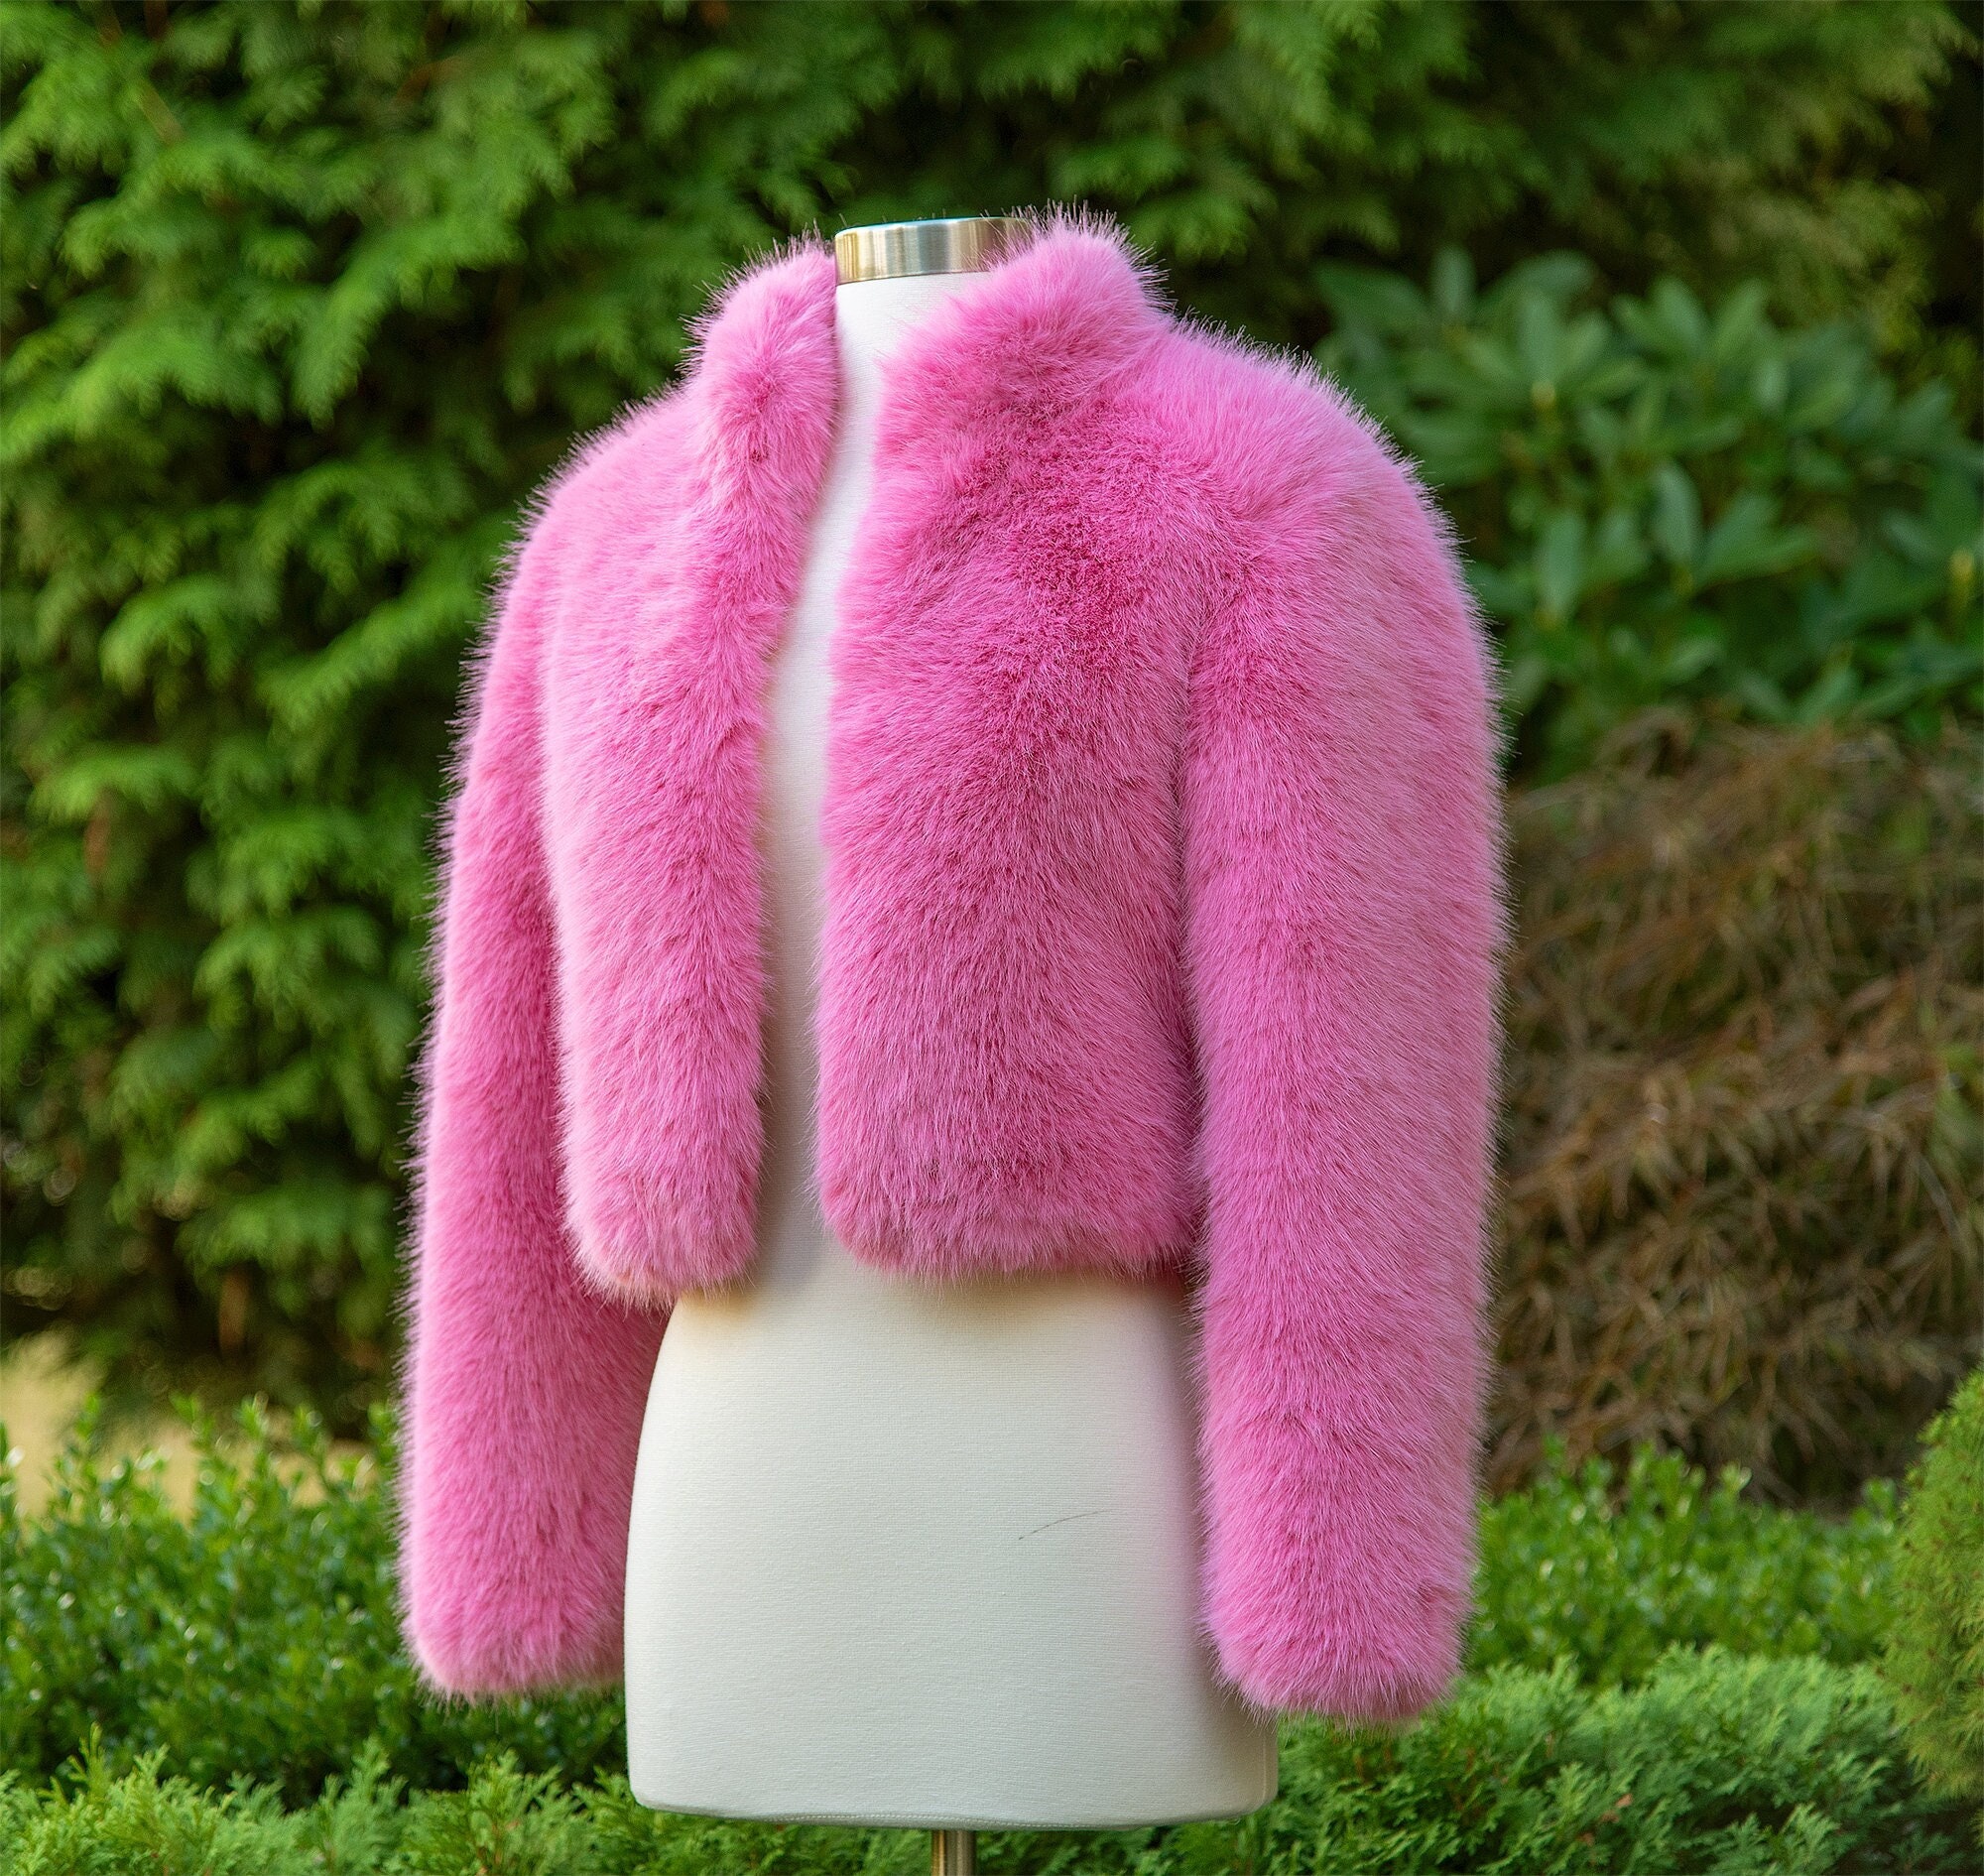 Pink Faux Fur Fox Tissavel, Fuchsia Fur as Real, Hot Pink Long Pile, Pink  Fox, Pink Fur Fabric, Luxury Crimson Faux Fur Full Metre100x150 